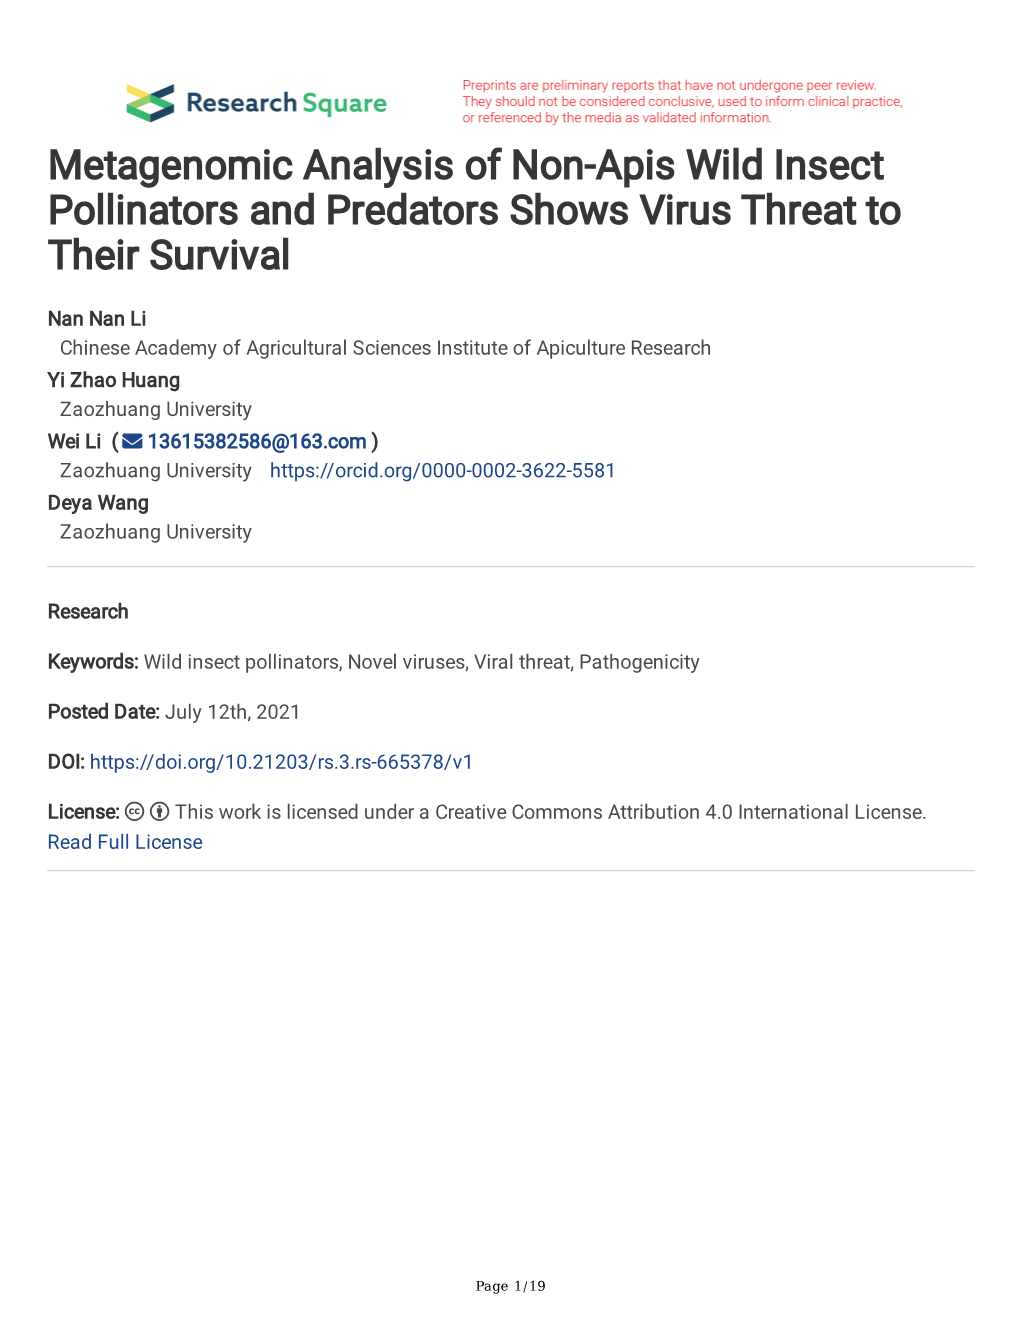 Metagenomic Analysis of Non-Apis Wild Insect Pollinators and Predators Shows Virus Threat to Their Survival